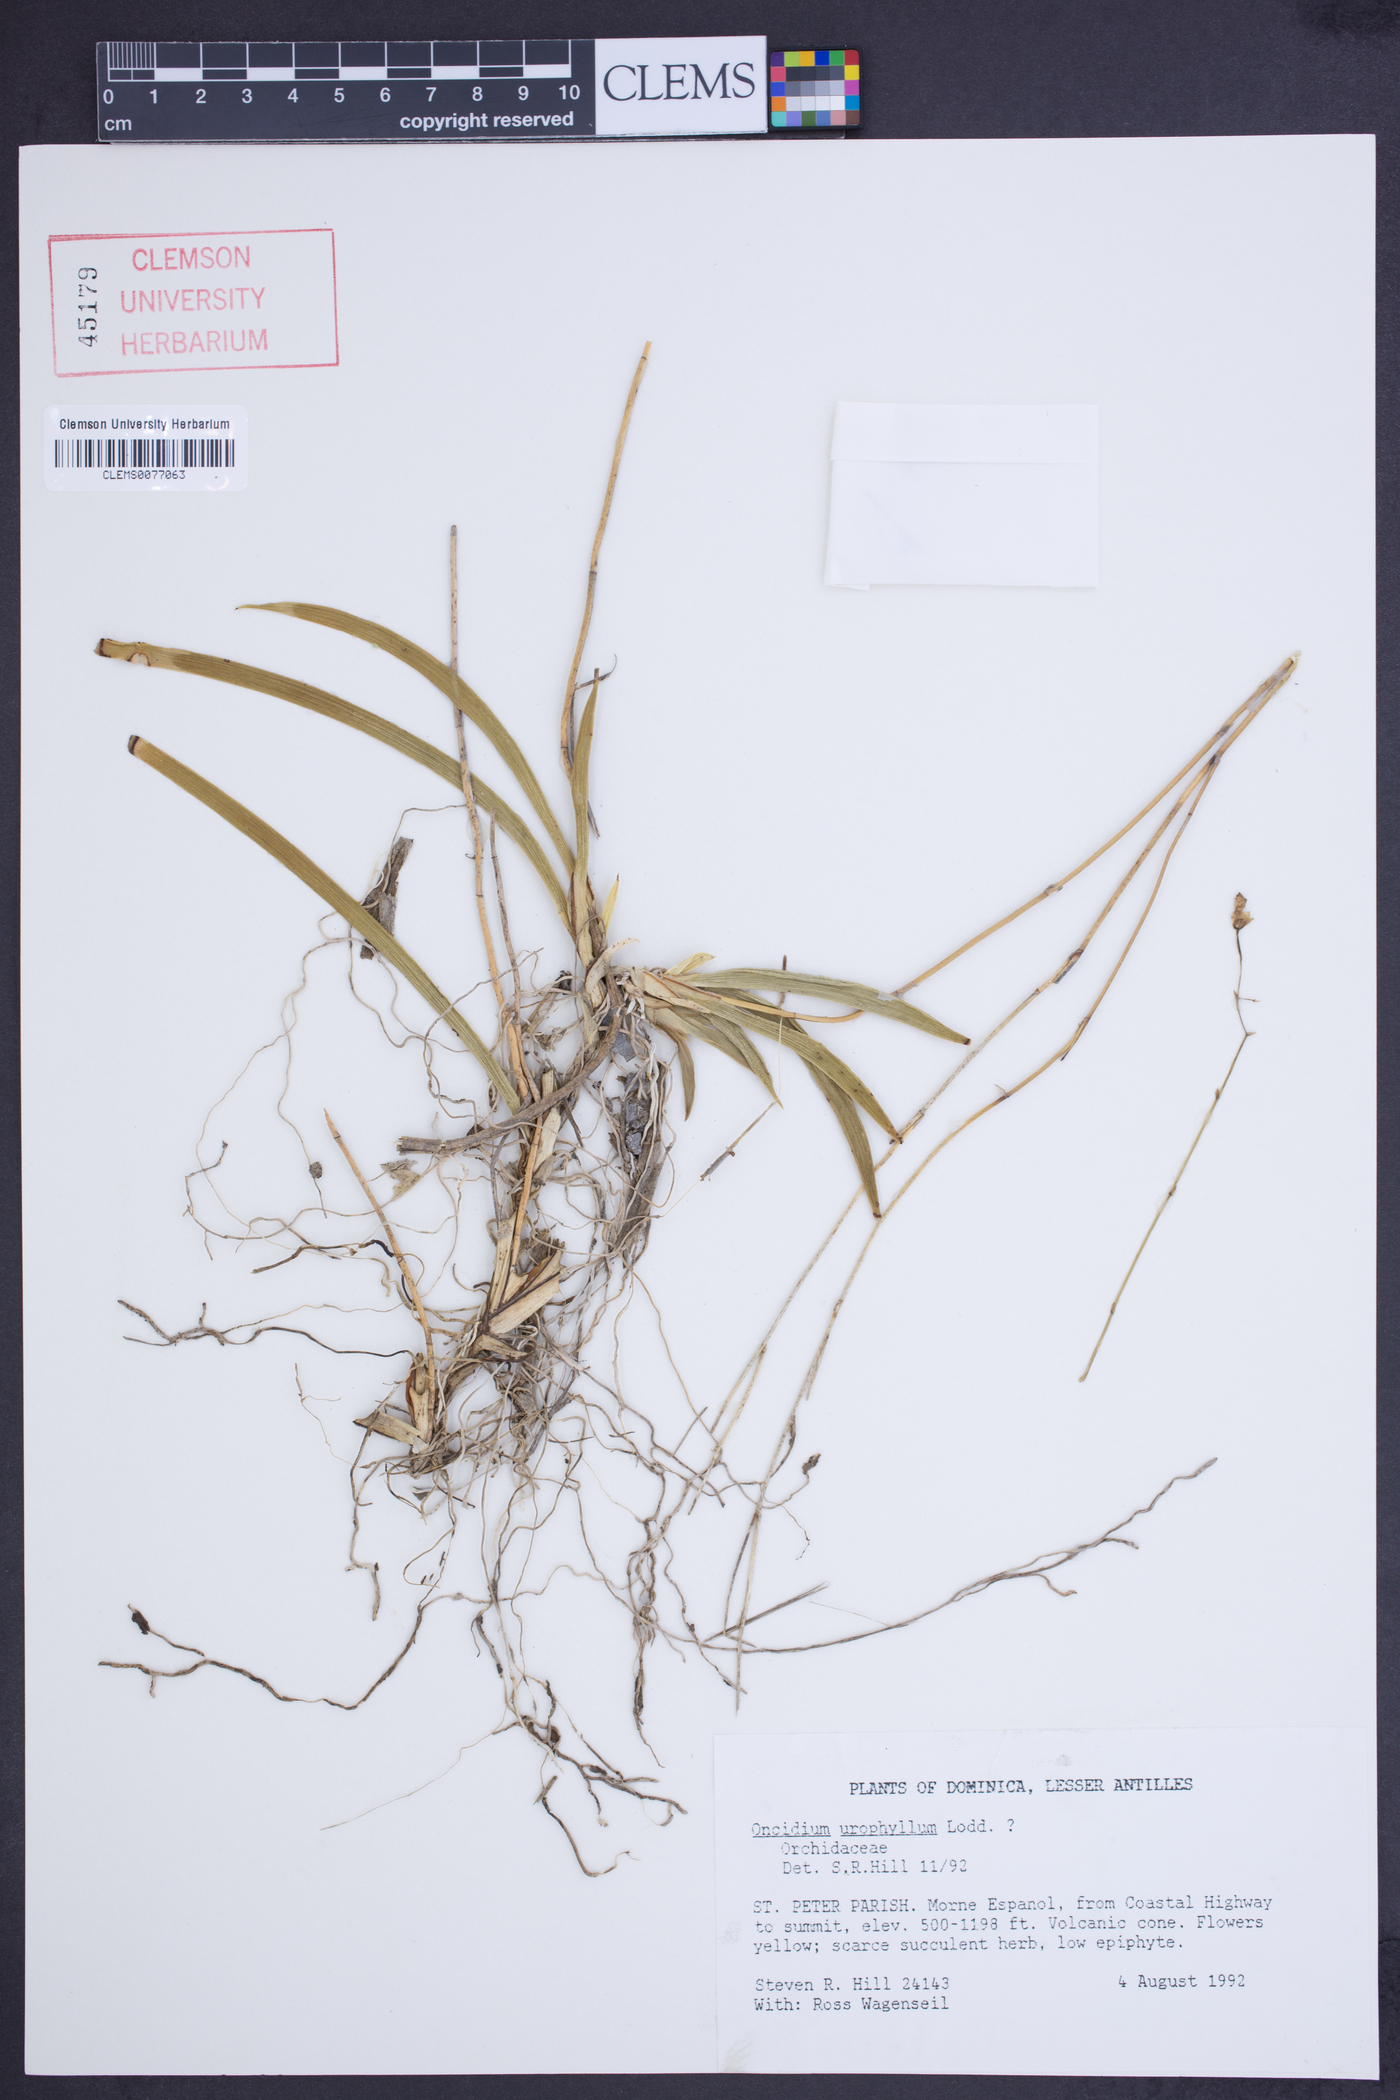 Tolumnia urophylla image